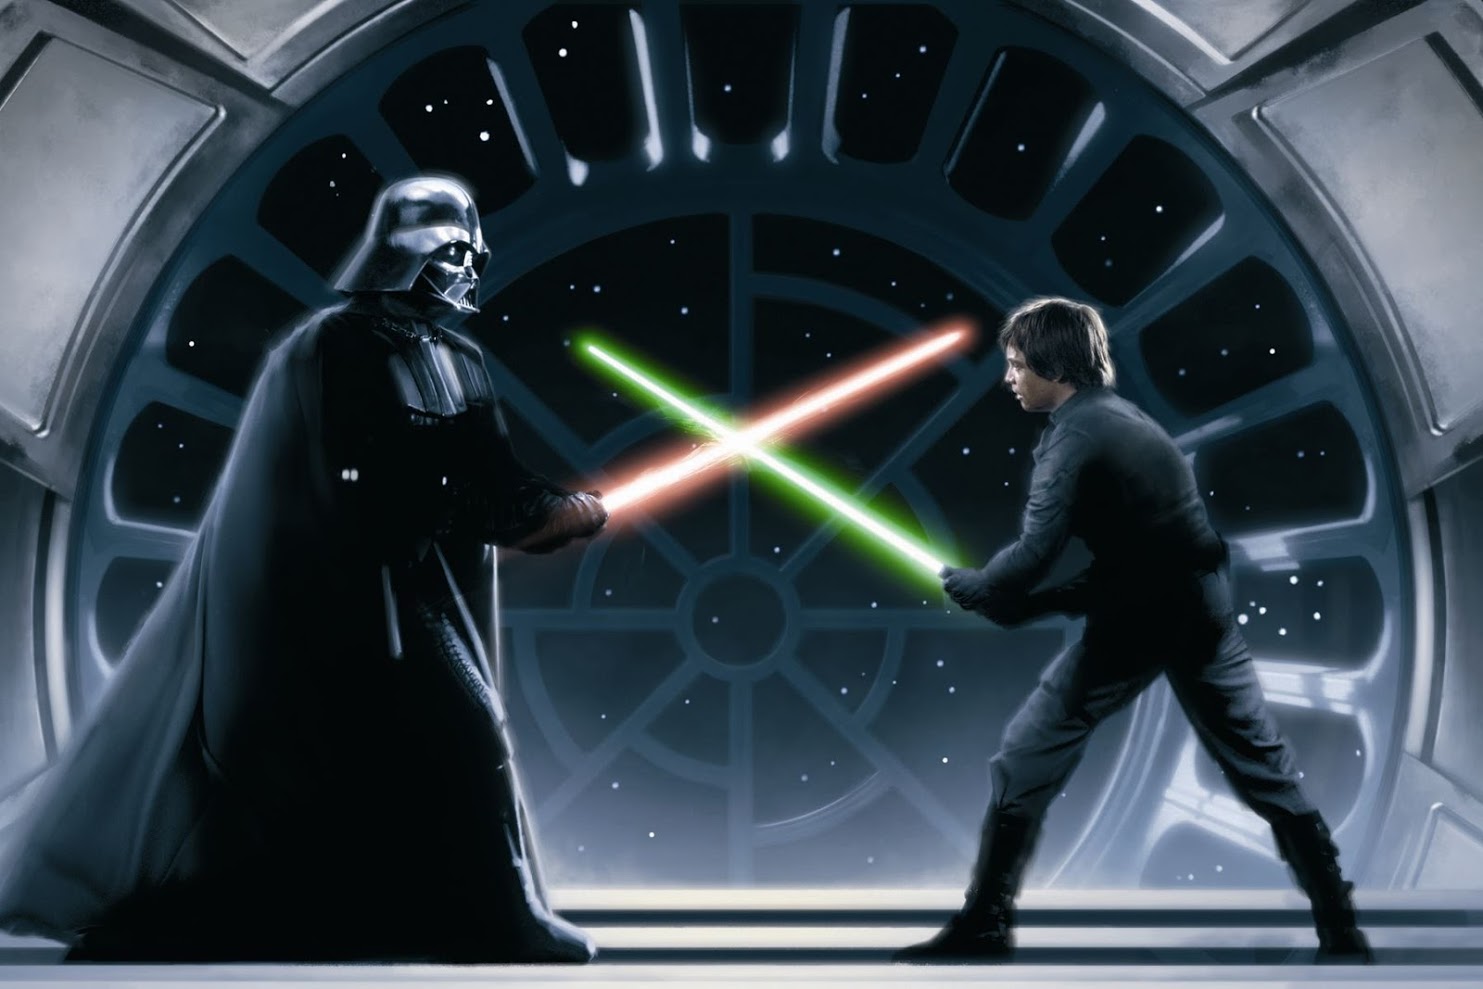 Darth Vador and Luke Skywalker with lasers crossed